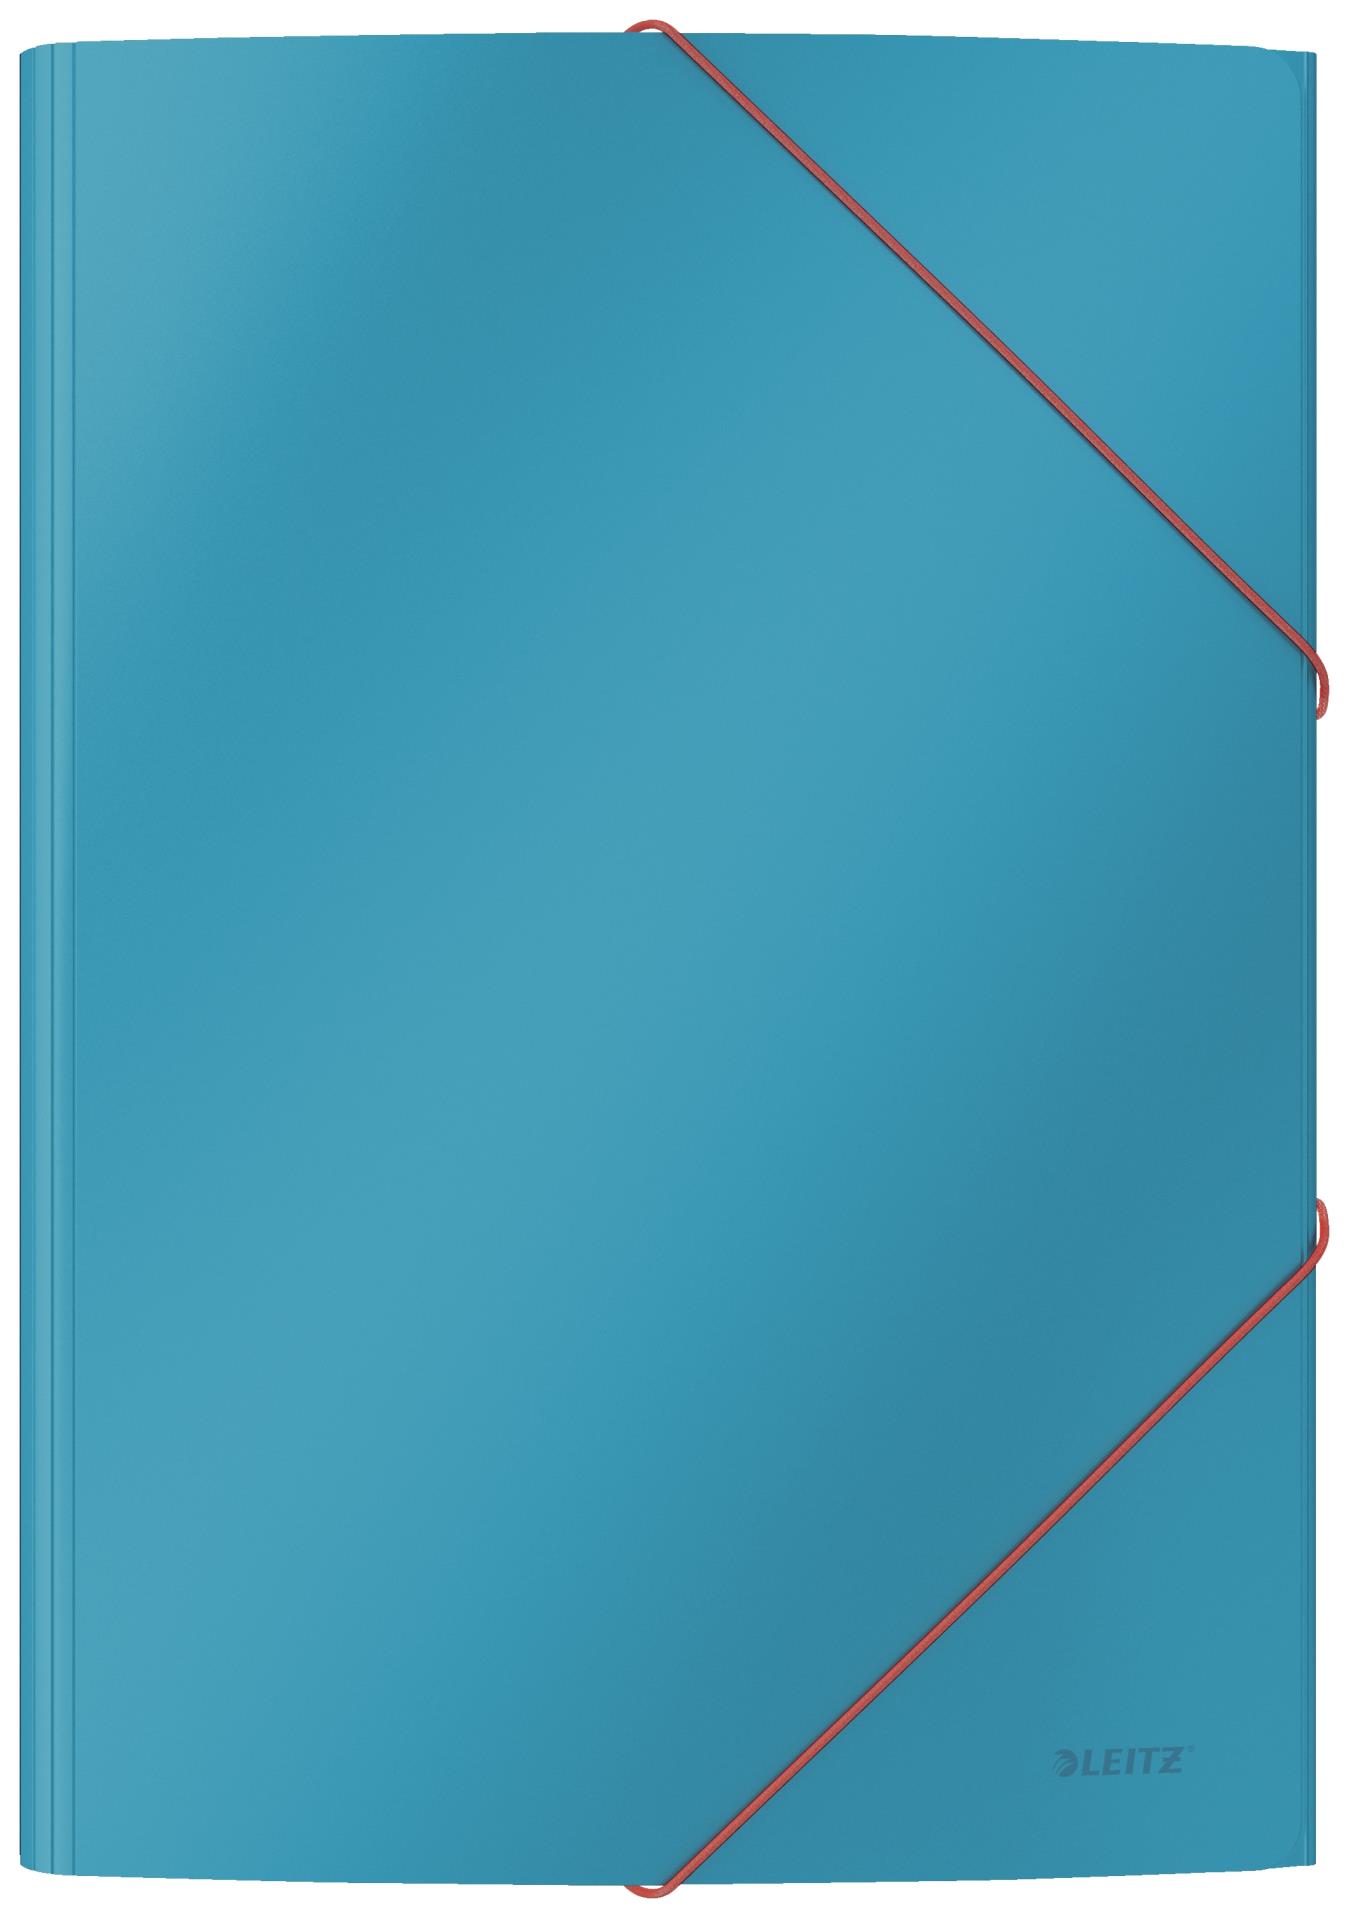 Desky s chlopněmi a gumičkou Leitz Cosy - A4, kartonové, modré, 1 ks